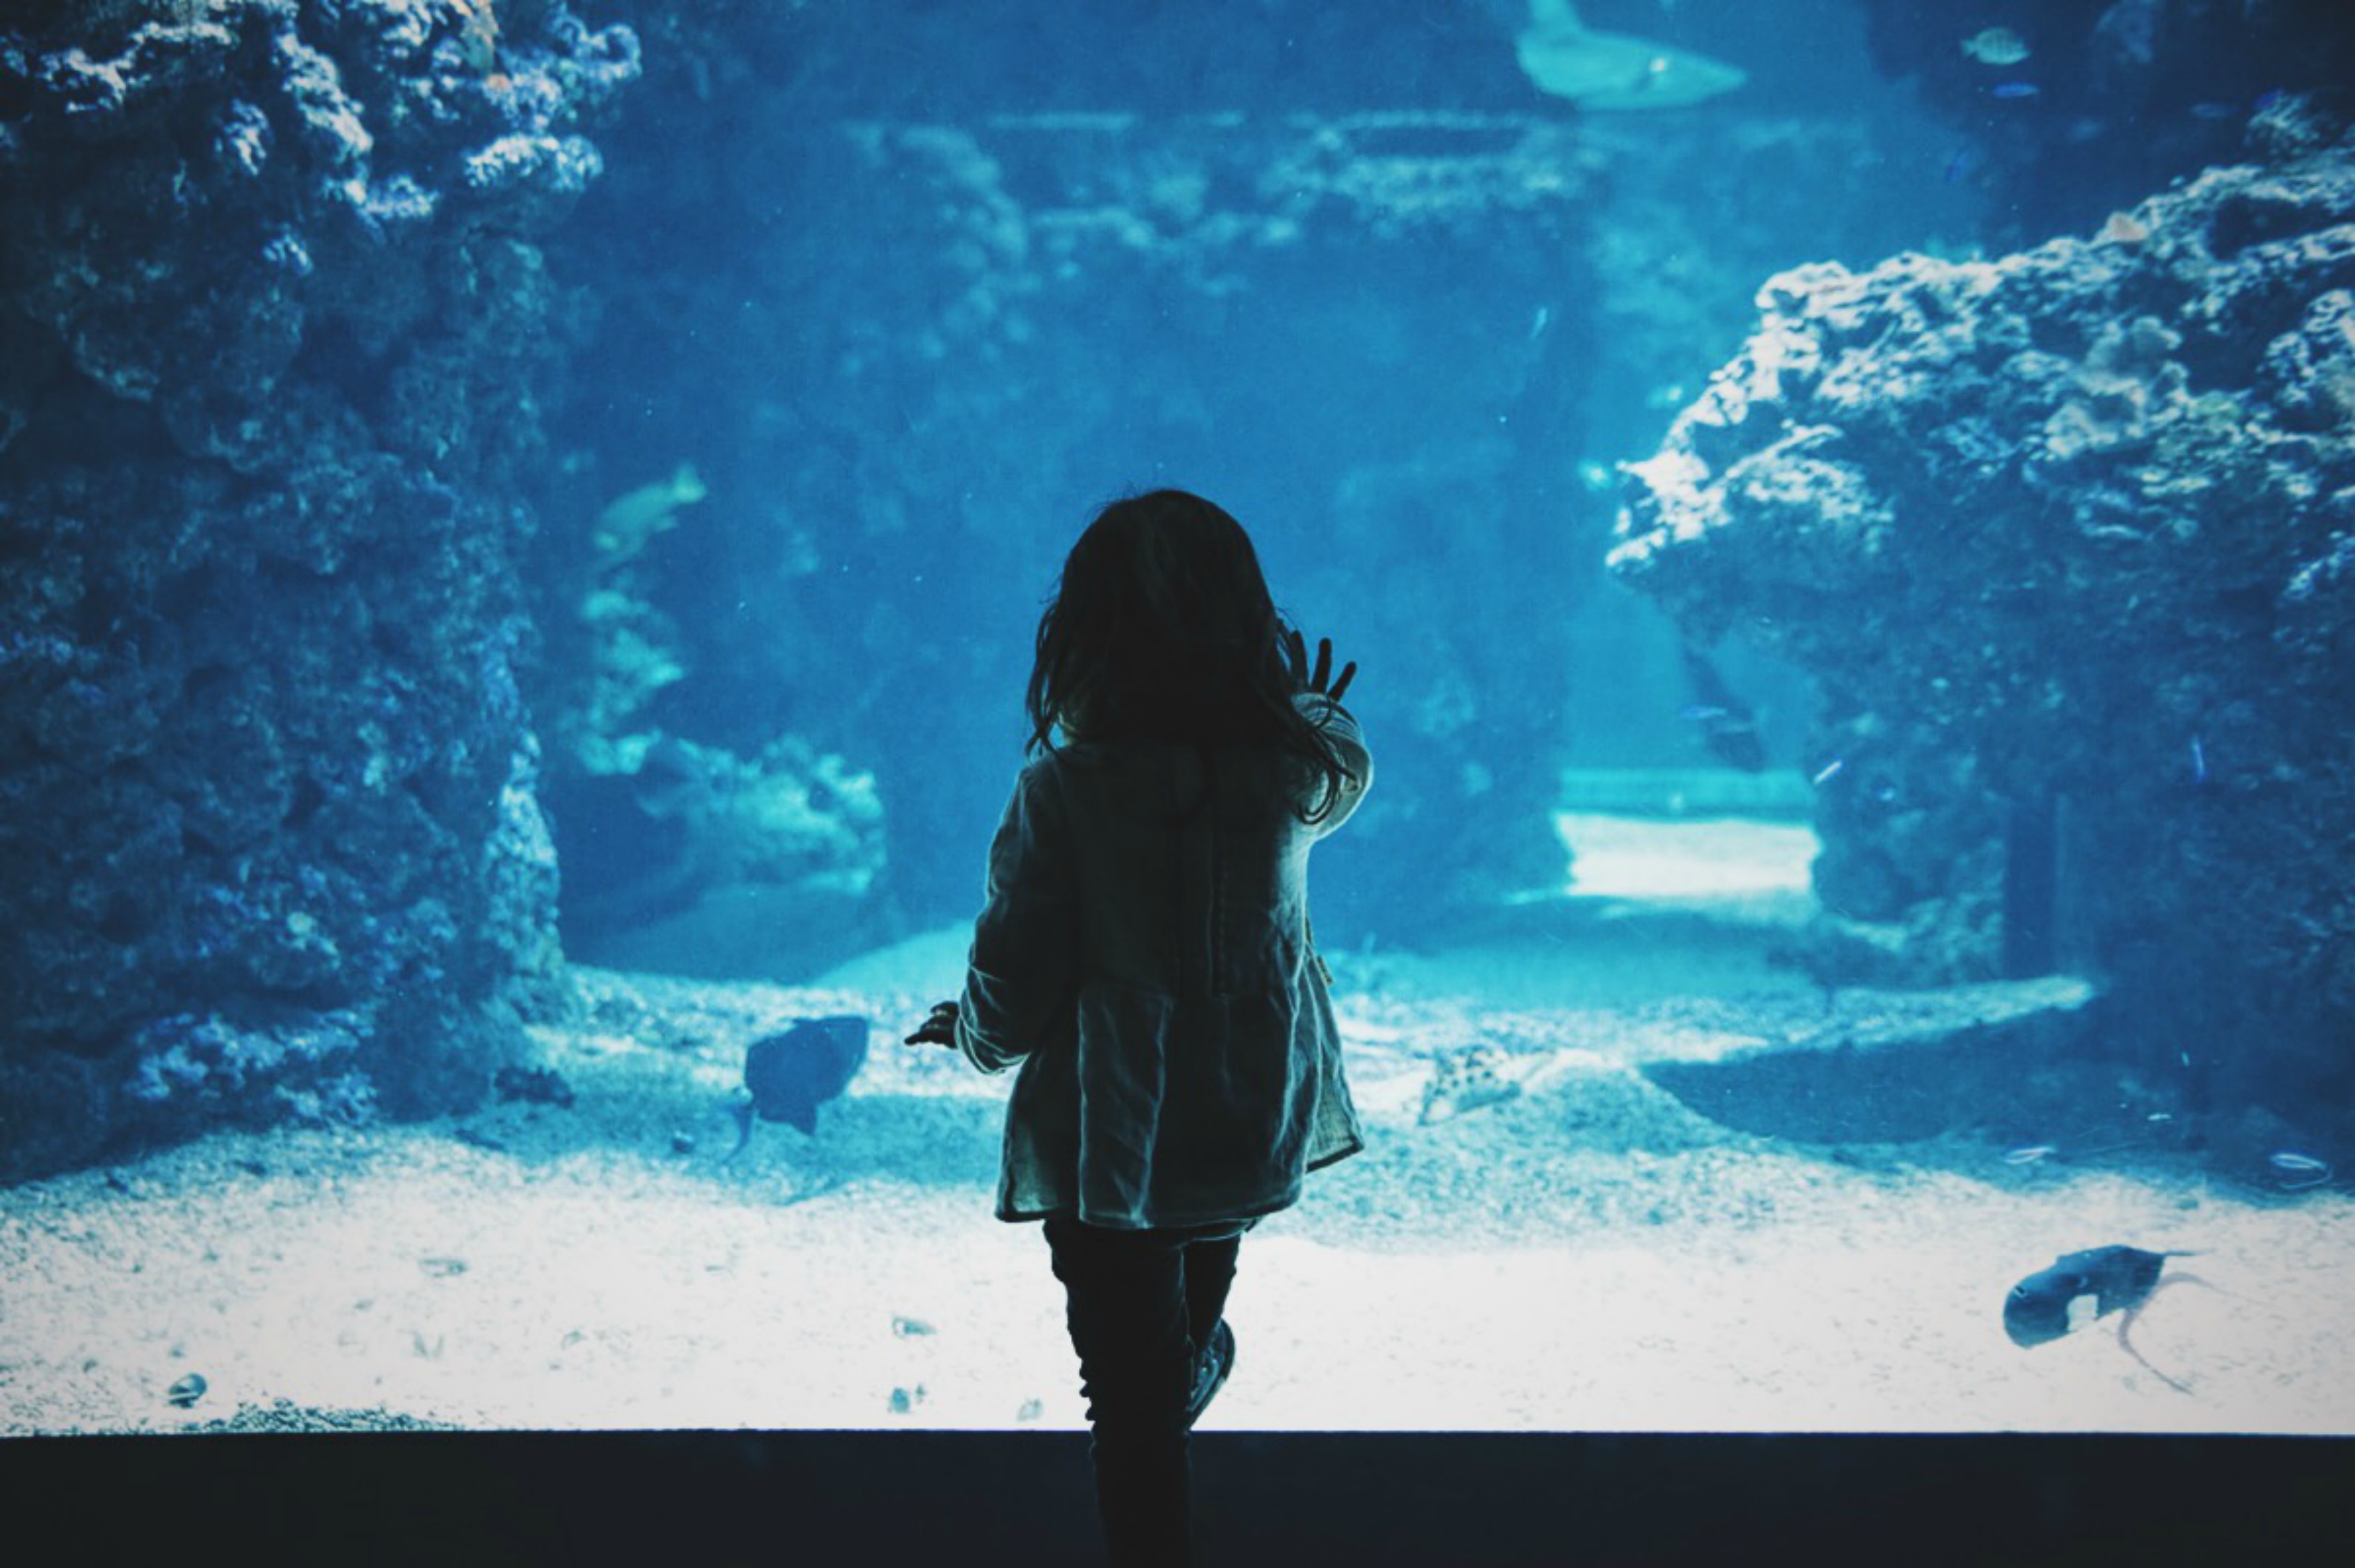 dark, miscellanea, miscellaneous, aquarium, touching, touch, child, back